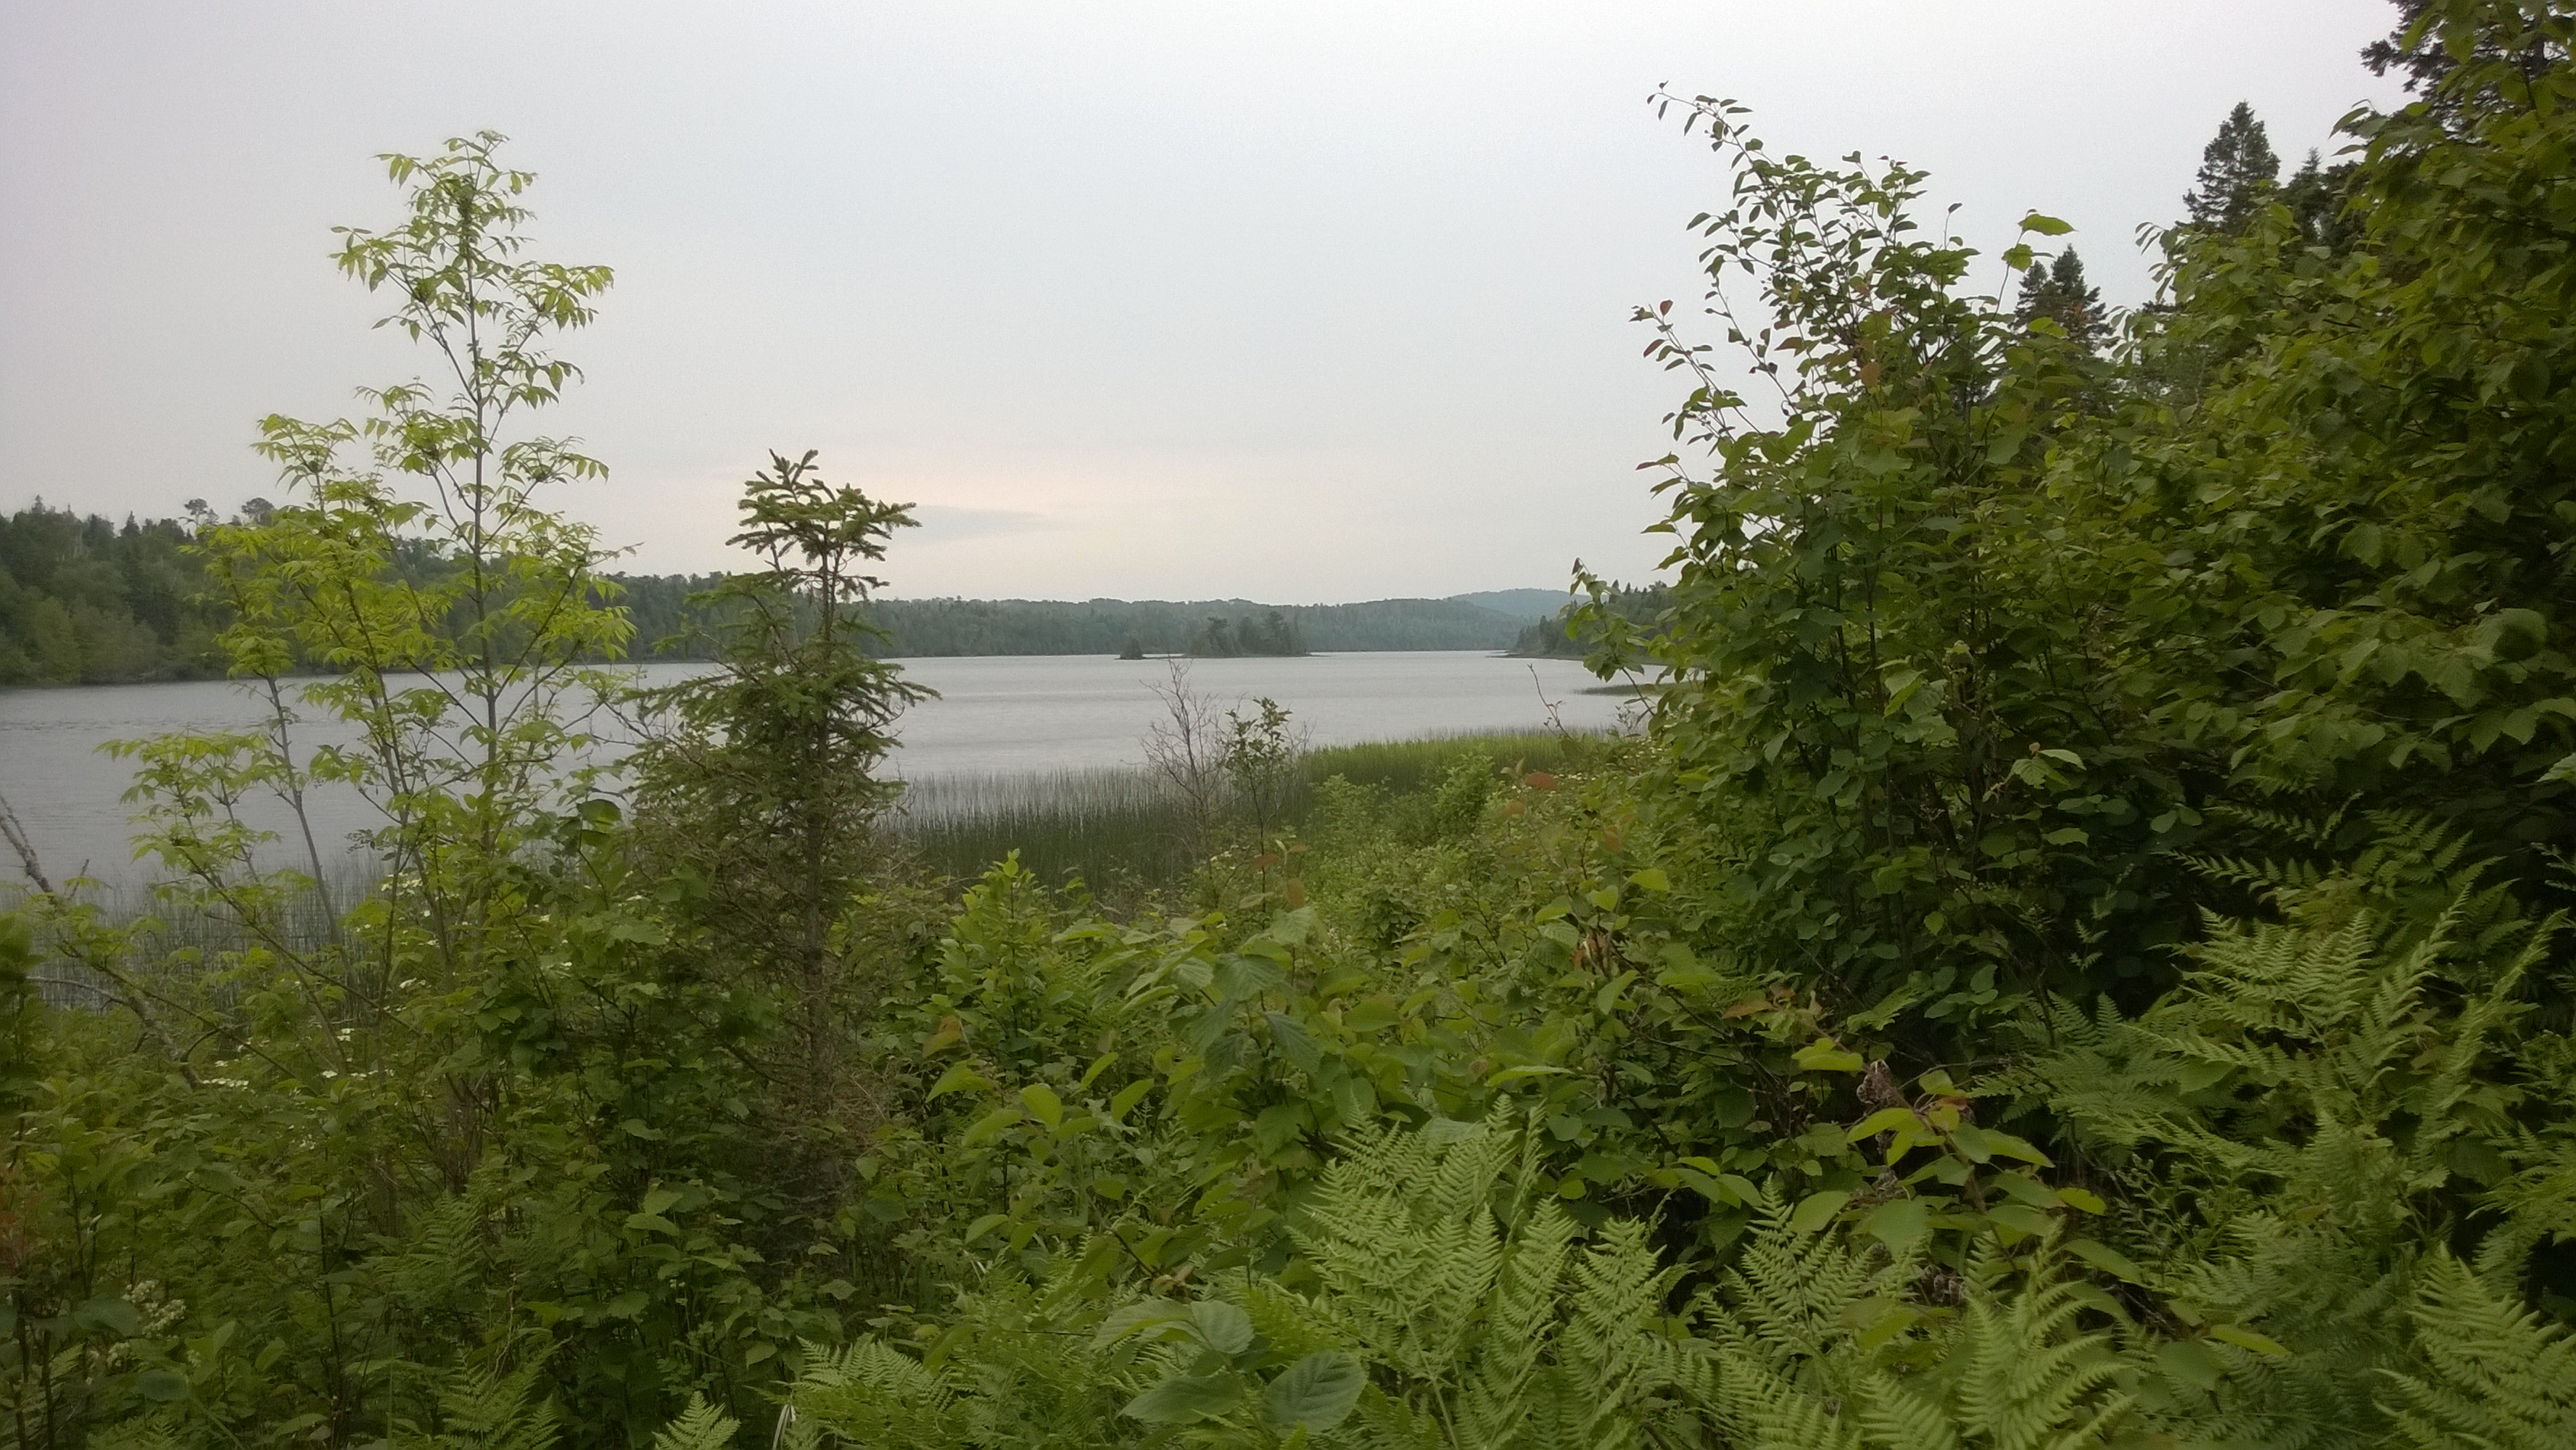 View of aquatic vegetation and trees surrounding Chickenbone Lake.